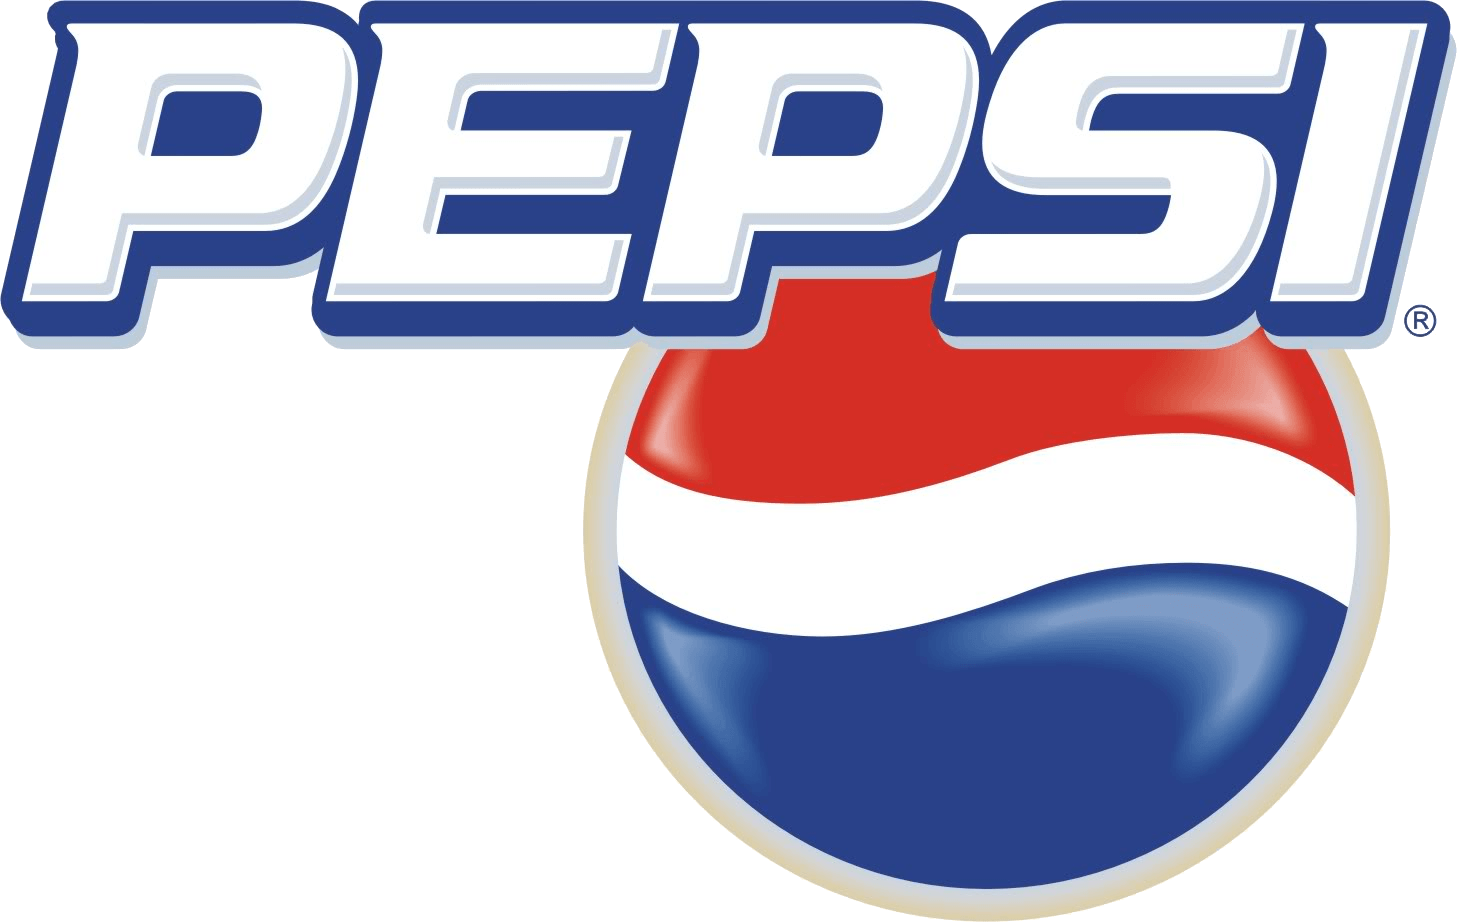 PepsiCo Brand Logo - Pepsi | Logopedia | FANDOM powered by Wikia